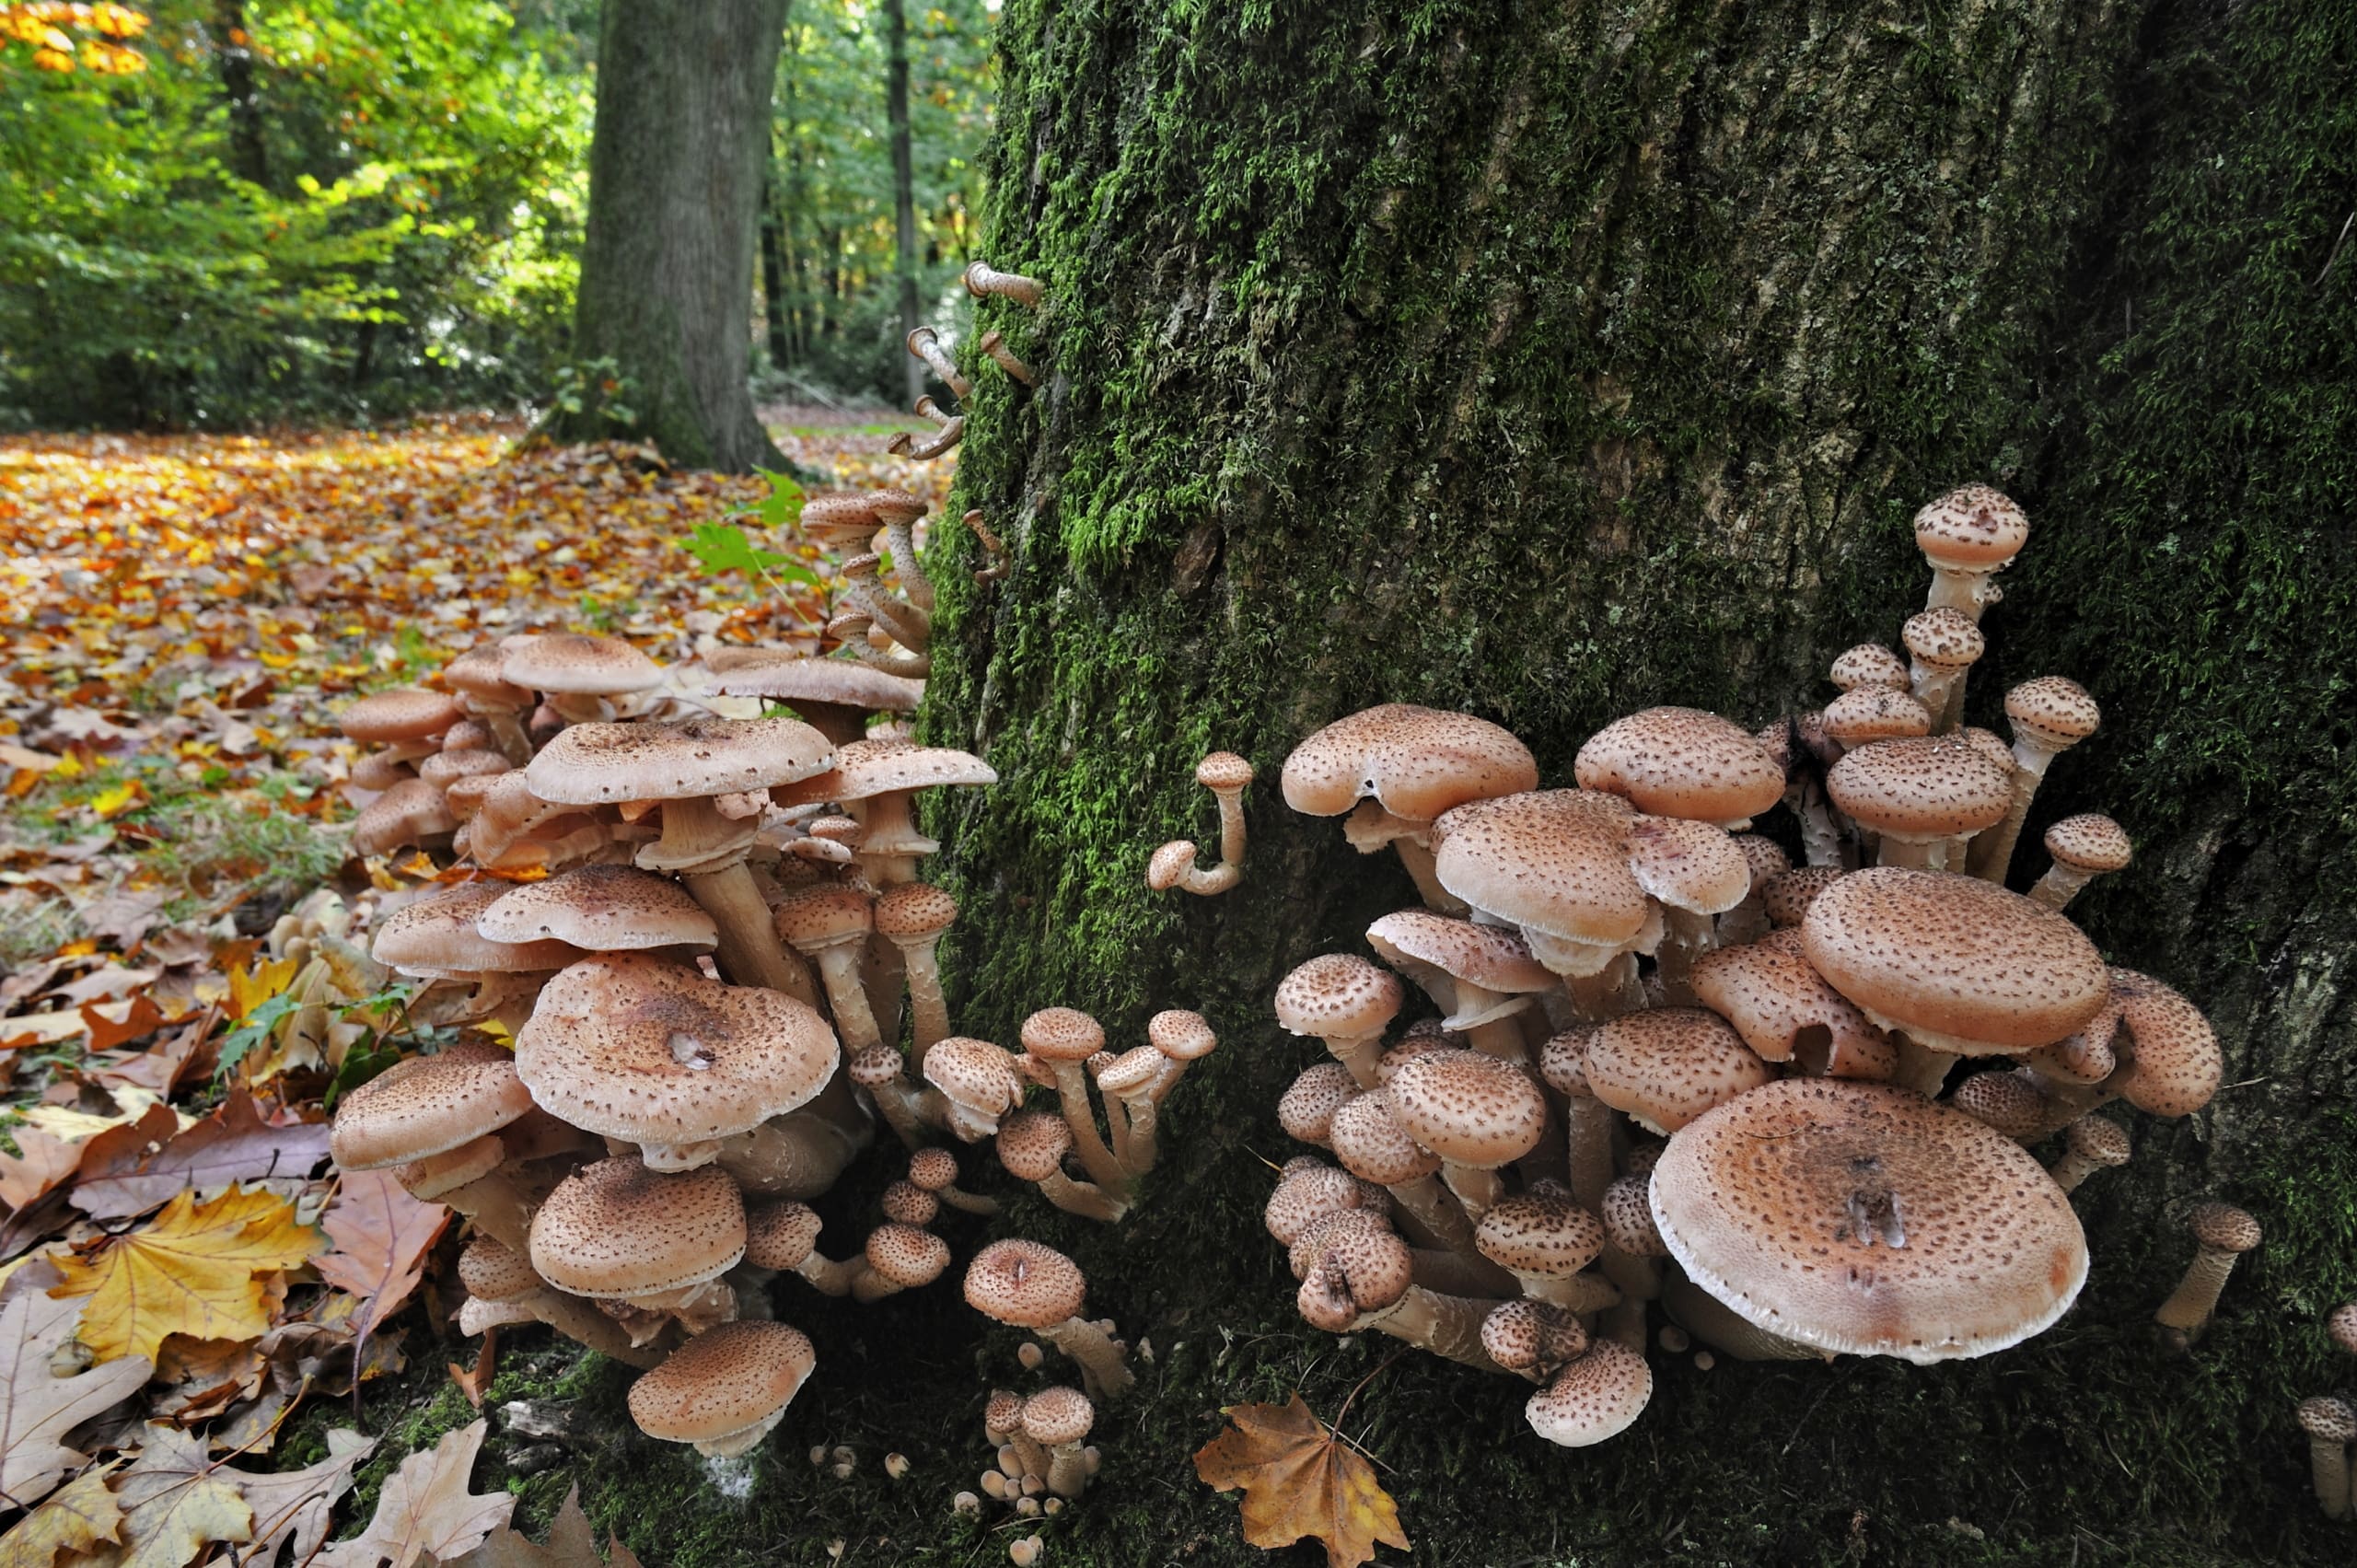 Dark honey fungus (Armillaria solidipes / Armillaria ostoyae) at base of infected tree